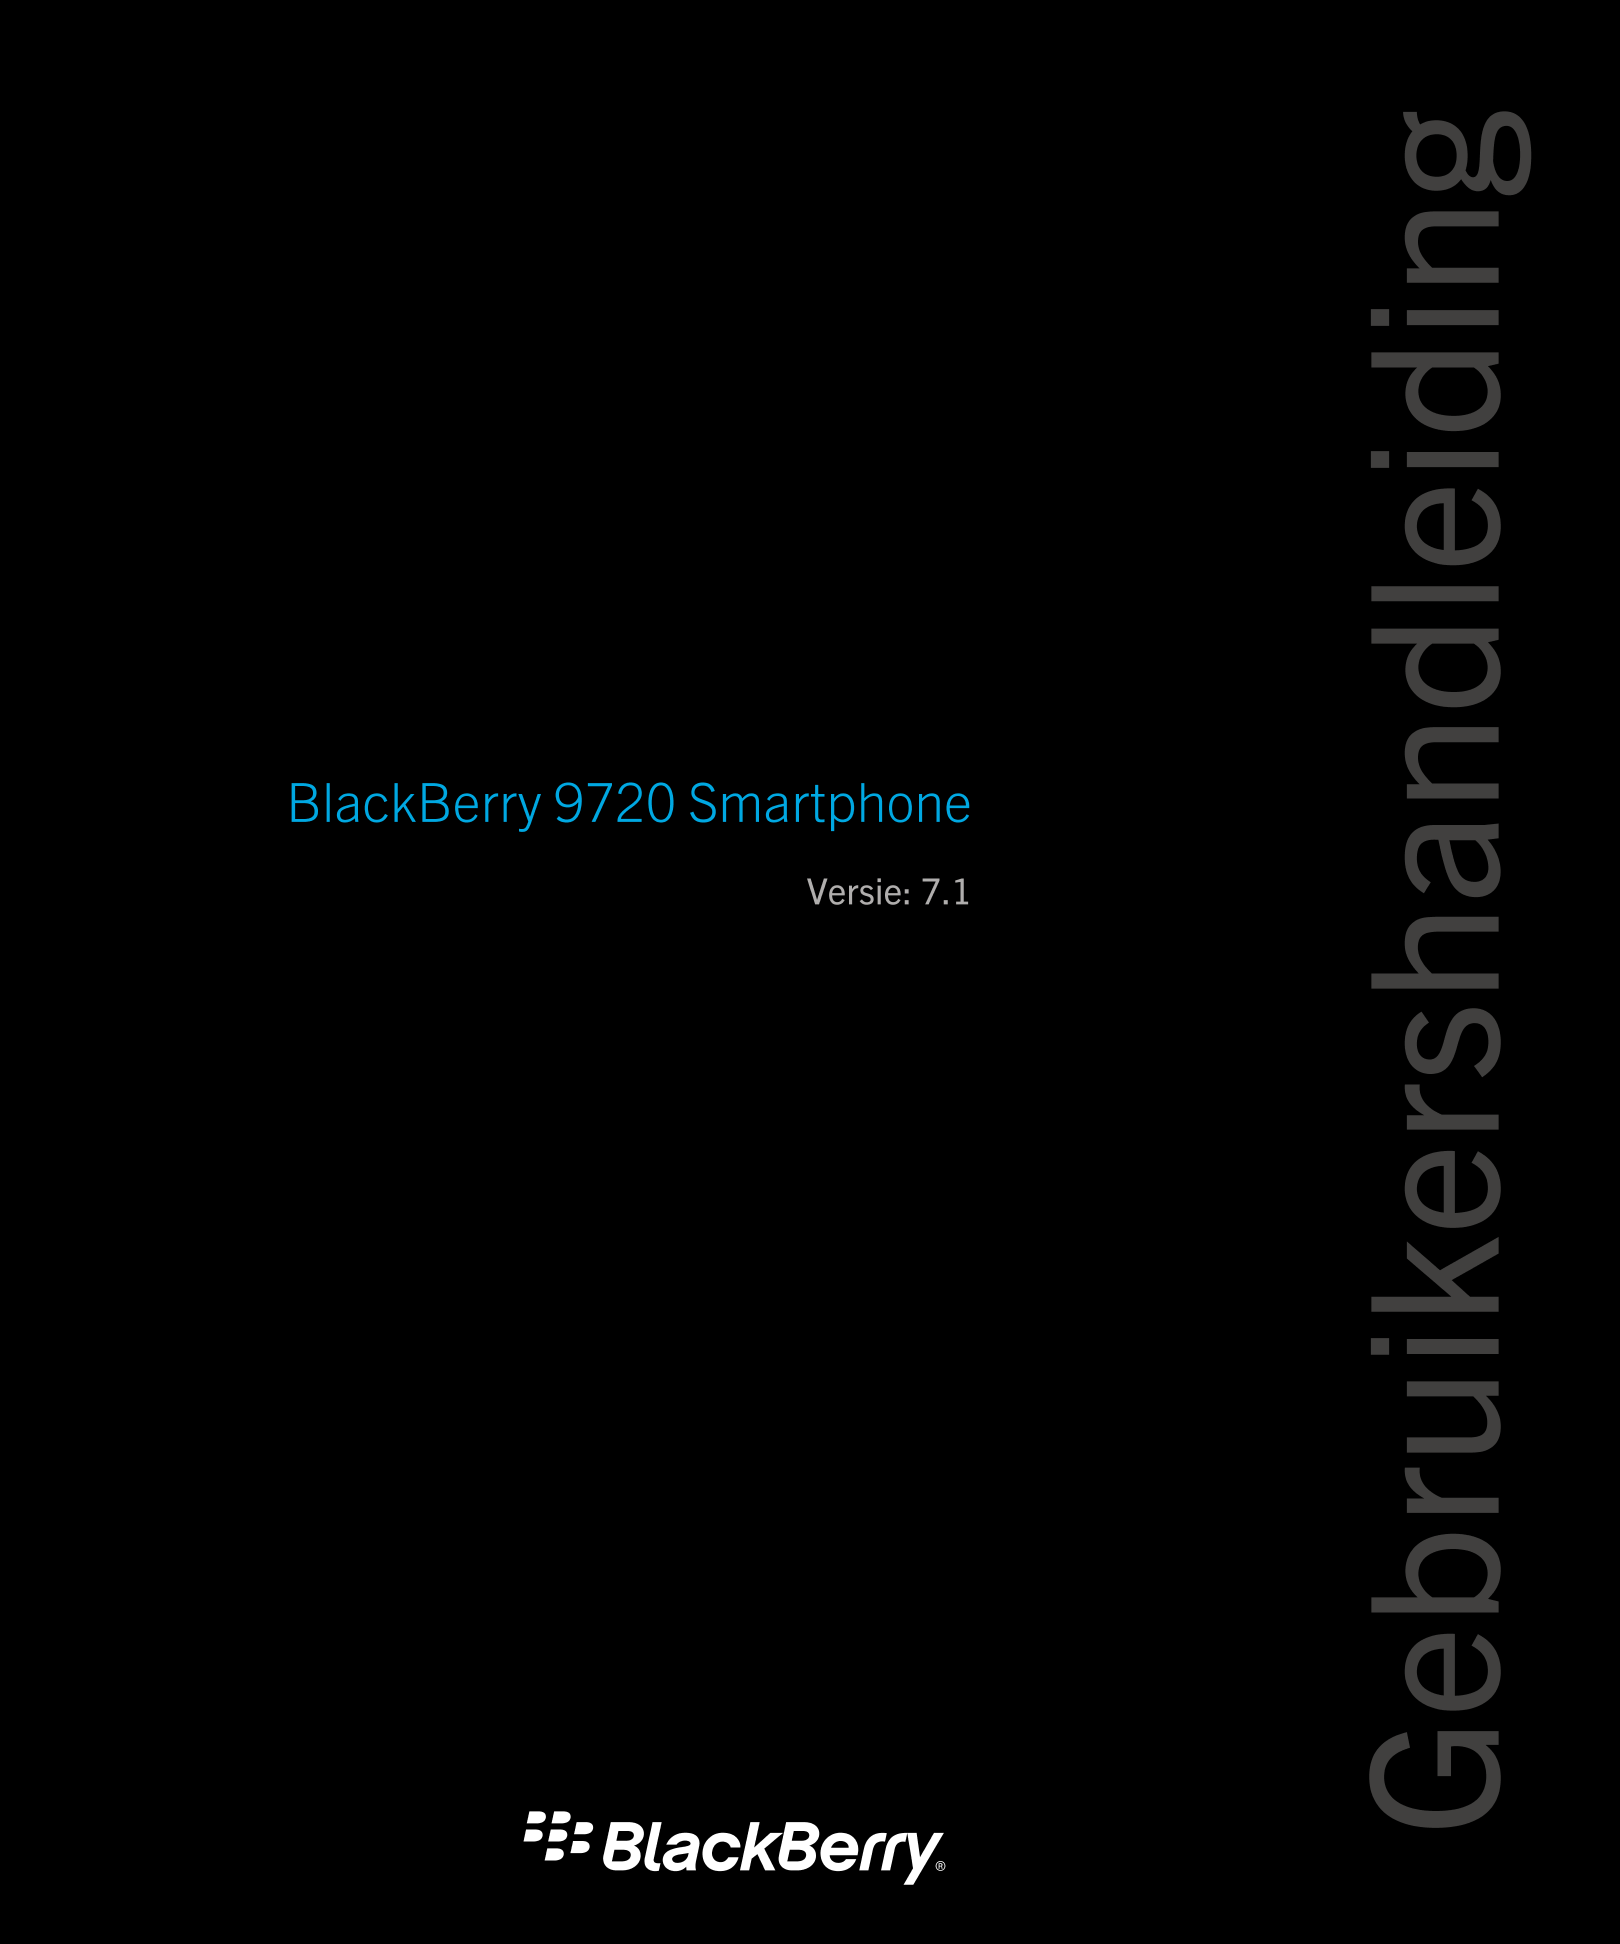 Gebruikershandleiding
BlackBerry 9720 Smartphone
Versie: 7.1